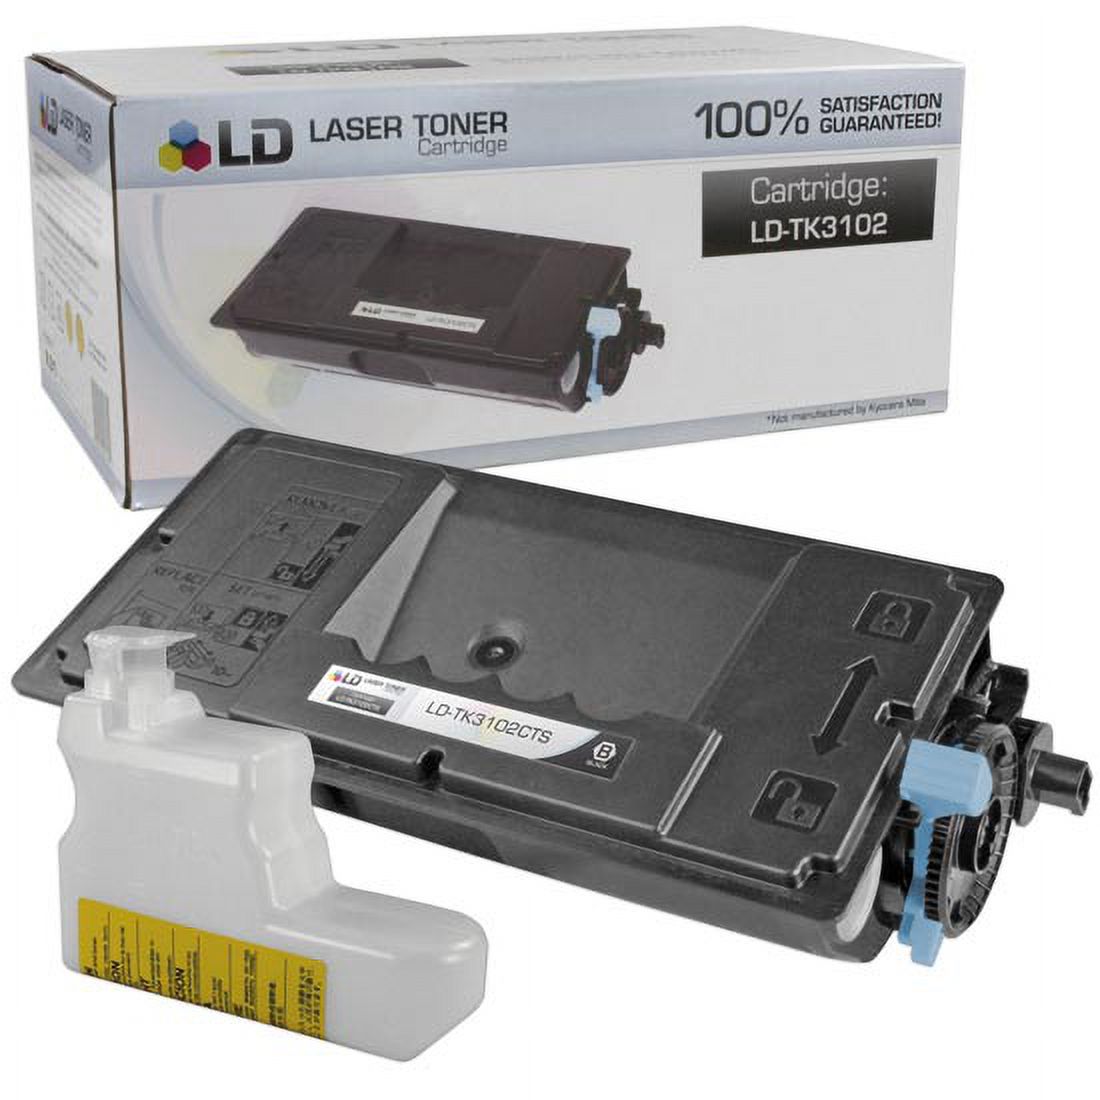 LD Compatible Kyocera-Mita Black TK-3102 / 1T02MS0US0 Laser Toner Cartridge for use in FS-2100DN Printers - image 2 of 2